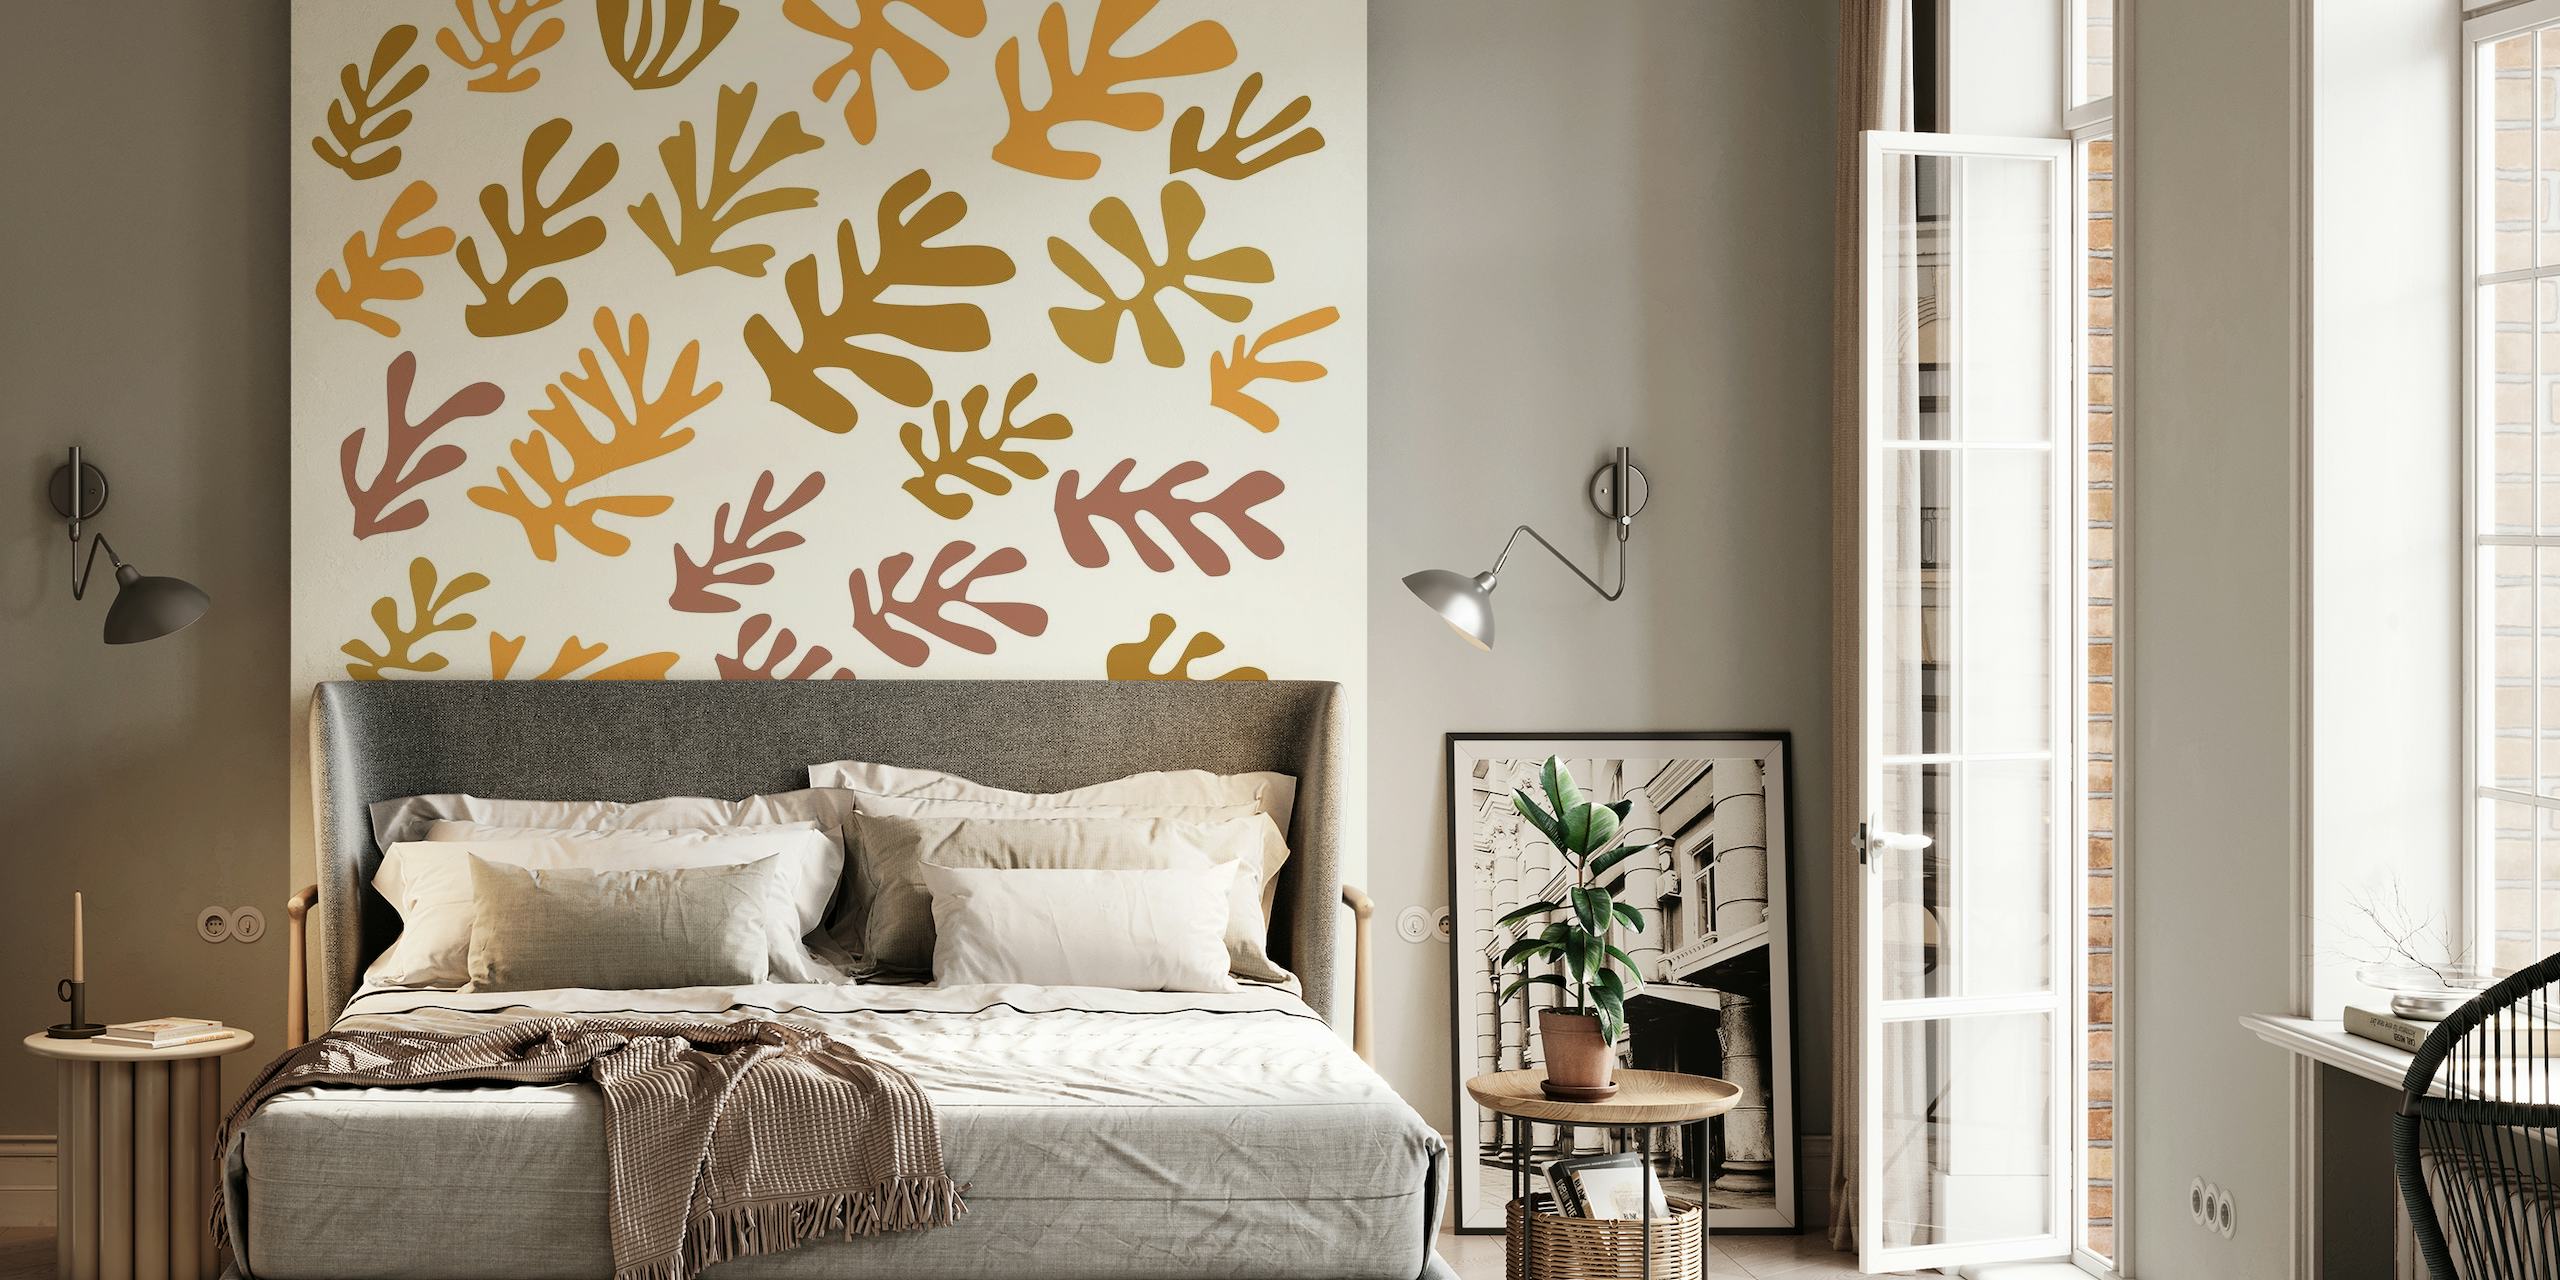 Matisse Inspired Warm Leaves wallpaper